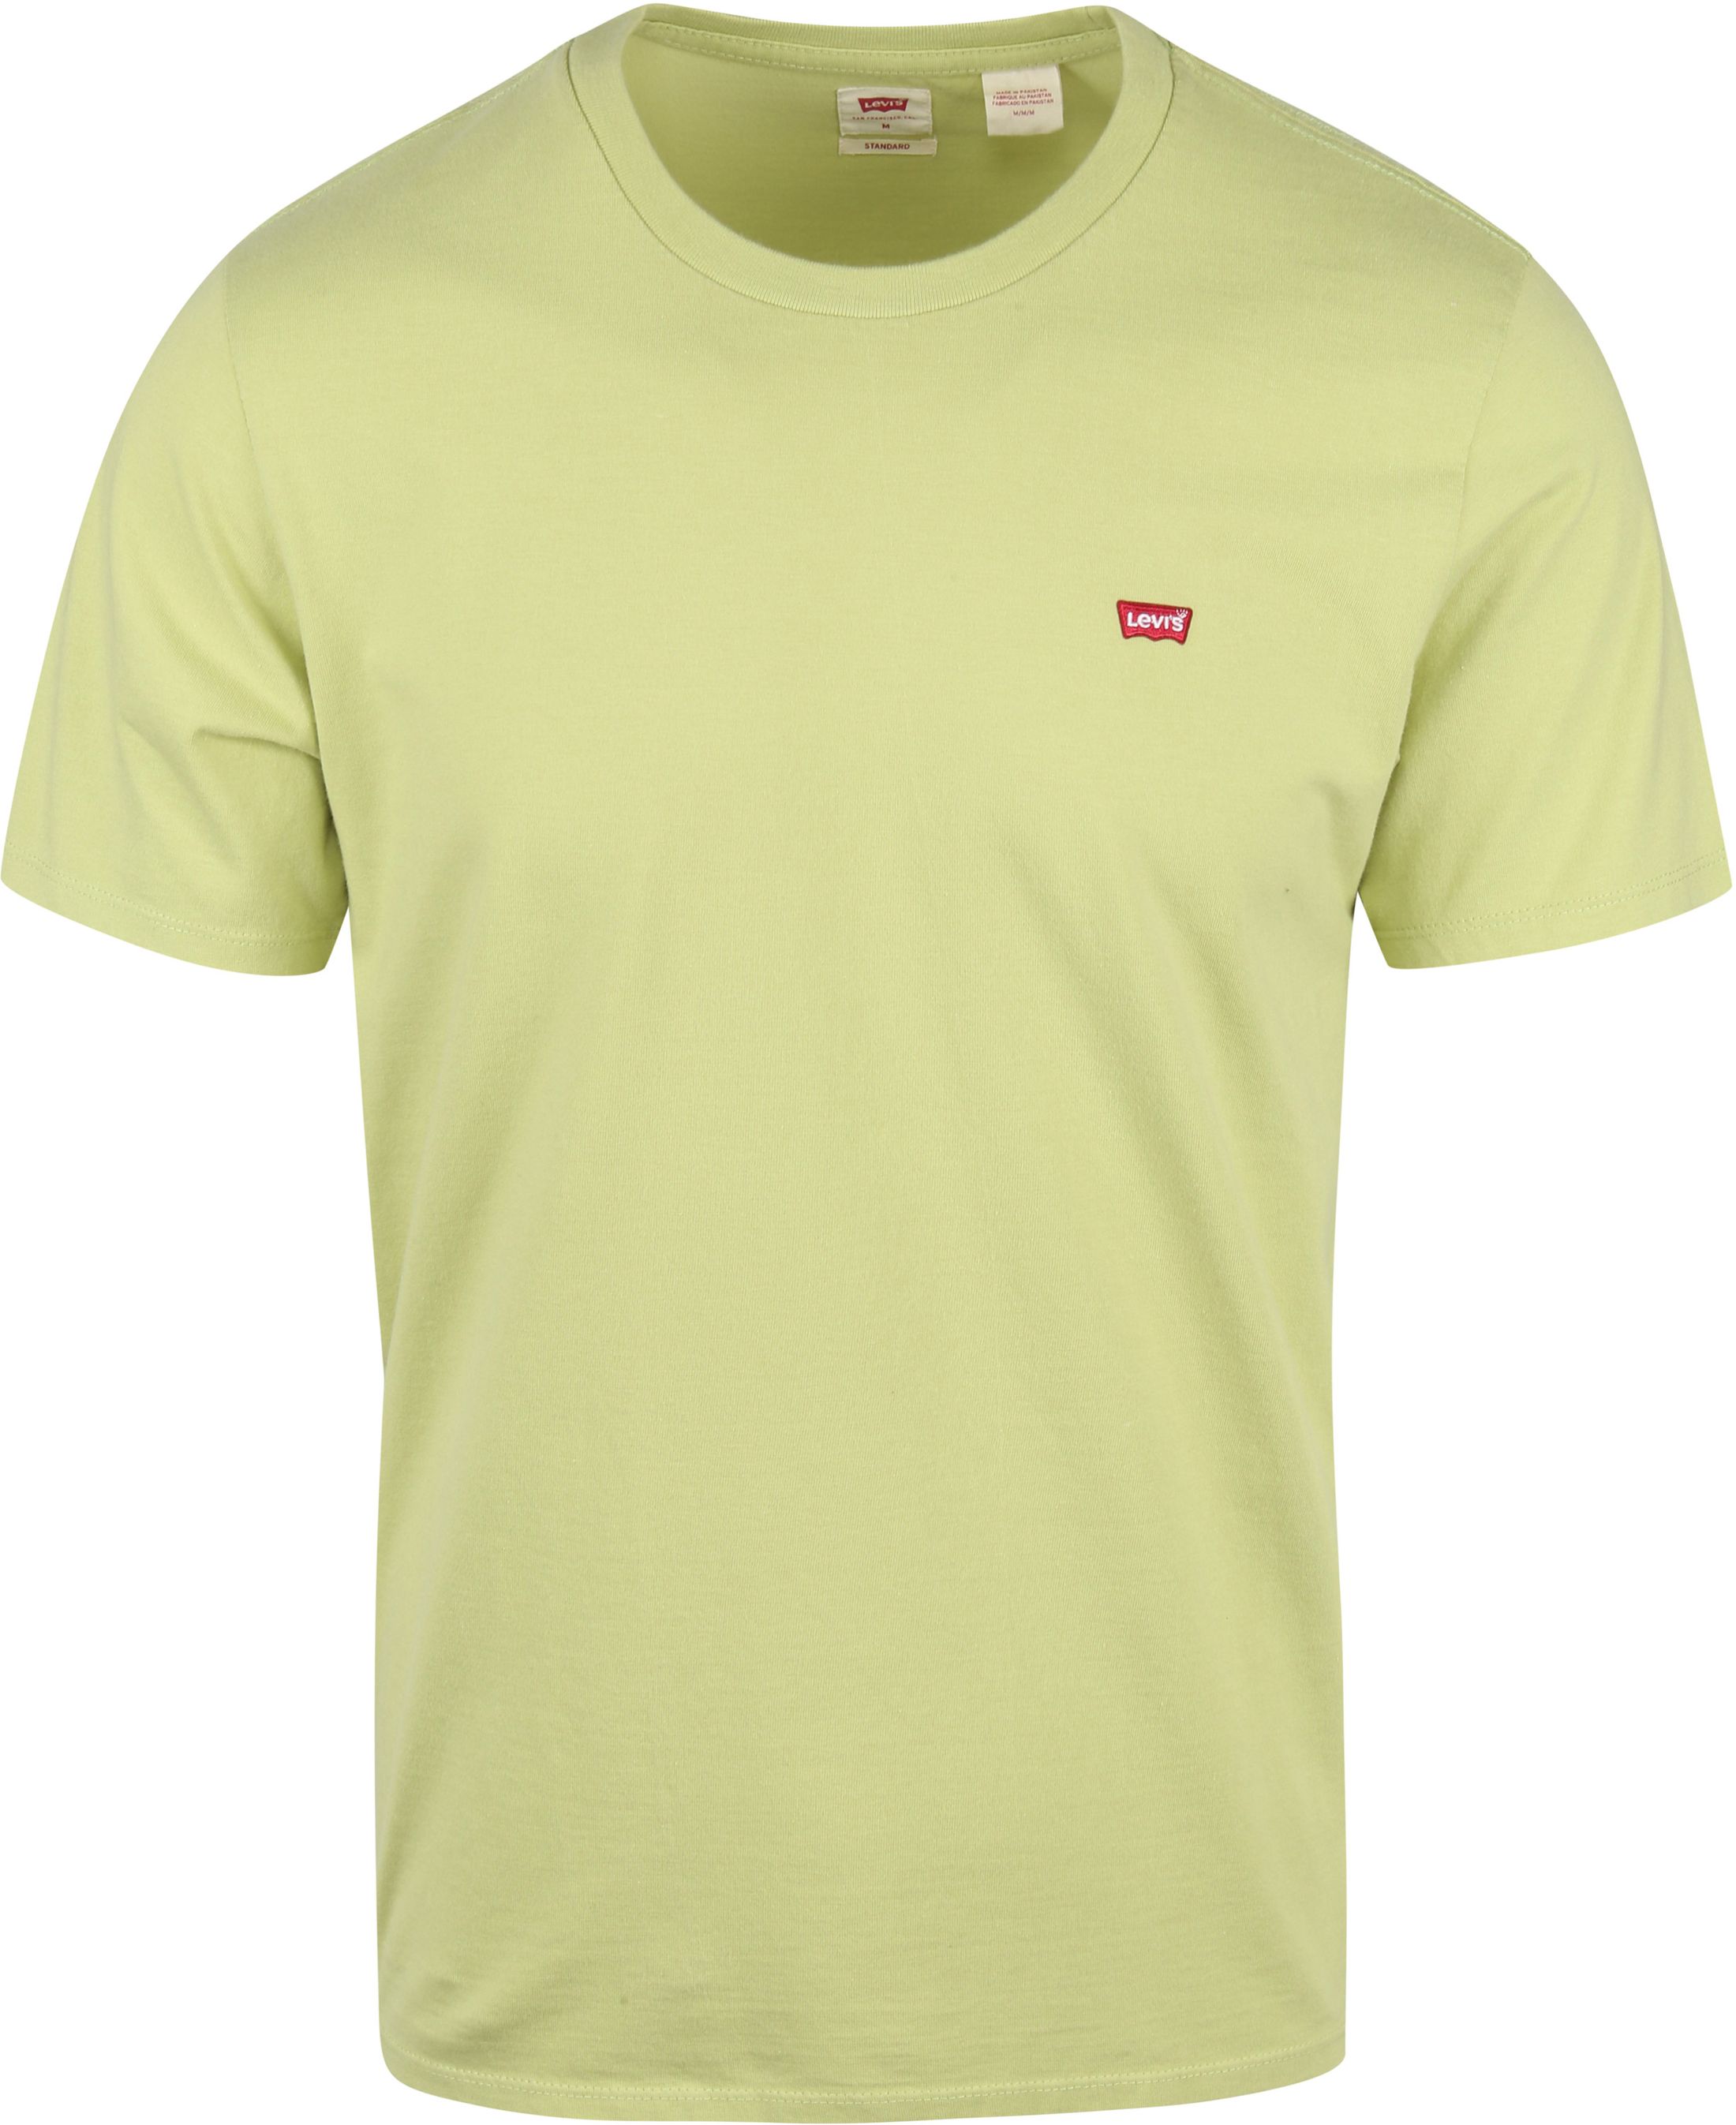 Levi's T Shirt Original Light Green size L